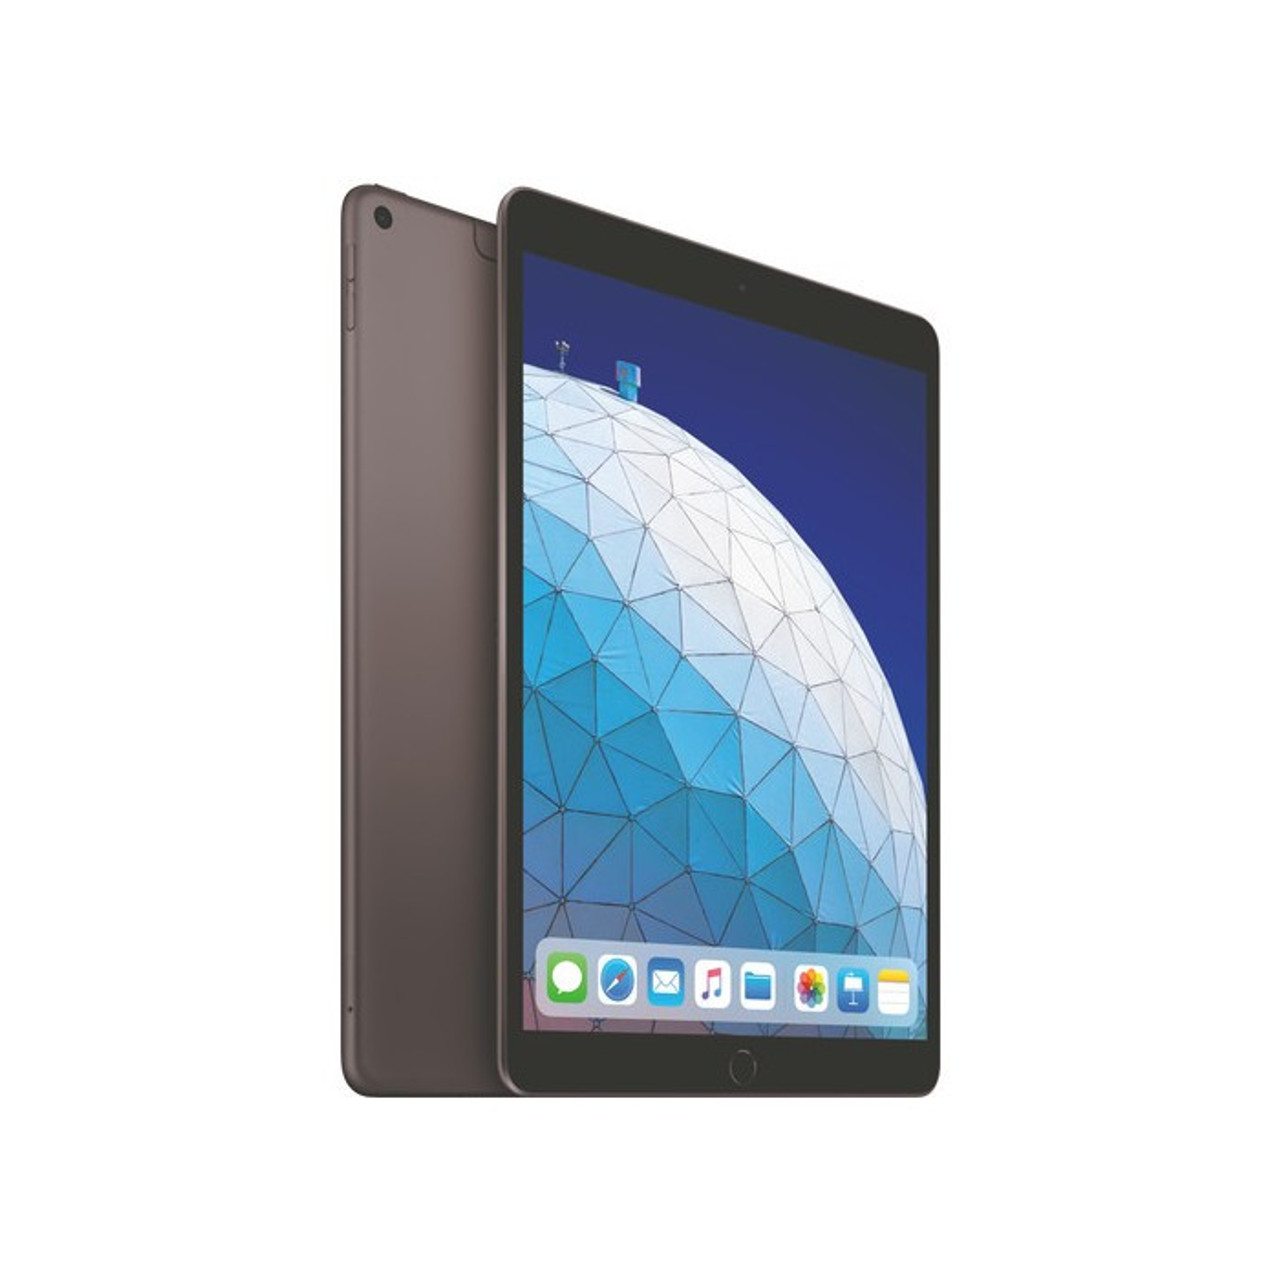 Touch ID*: Apple iPad Air 3 Wi-Fi 64GB - Space Gray MUUJ2LL/A